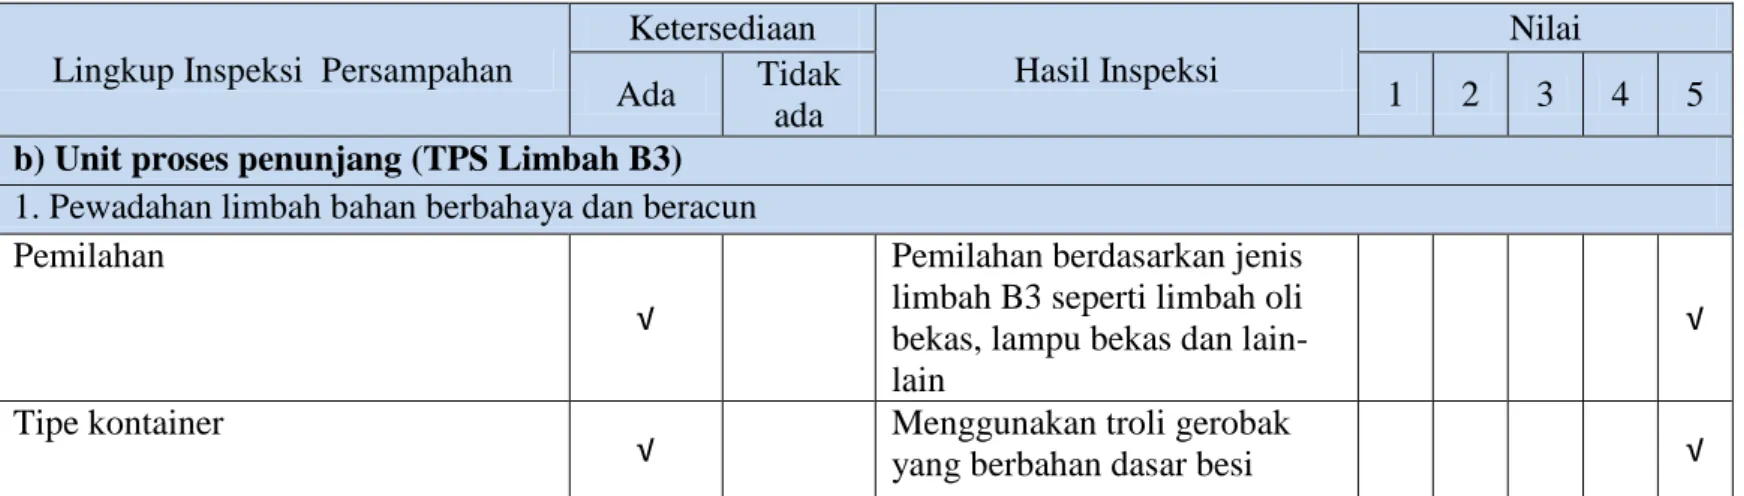 Tabel 3.10 Hasil inspeksi penilaian pewadahan limbah b3 